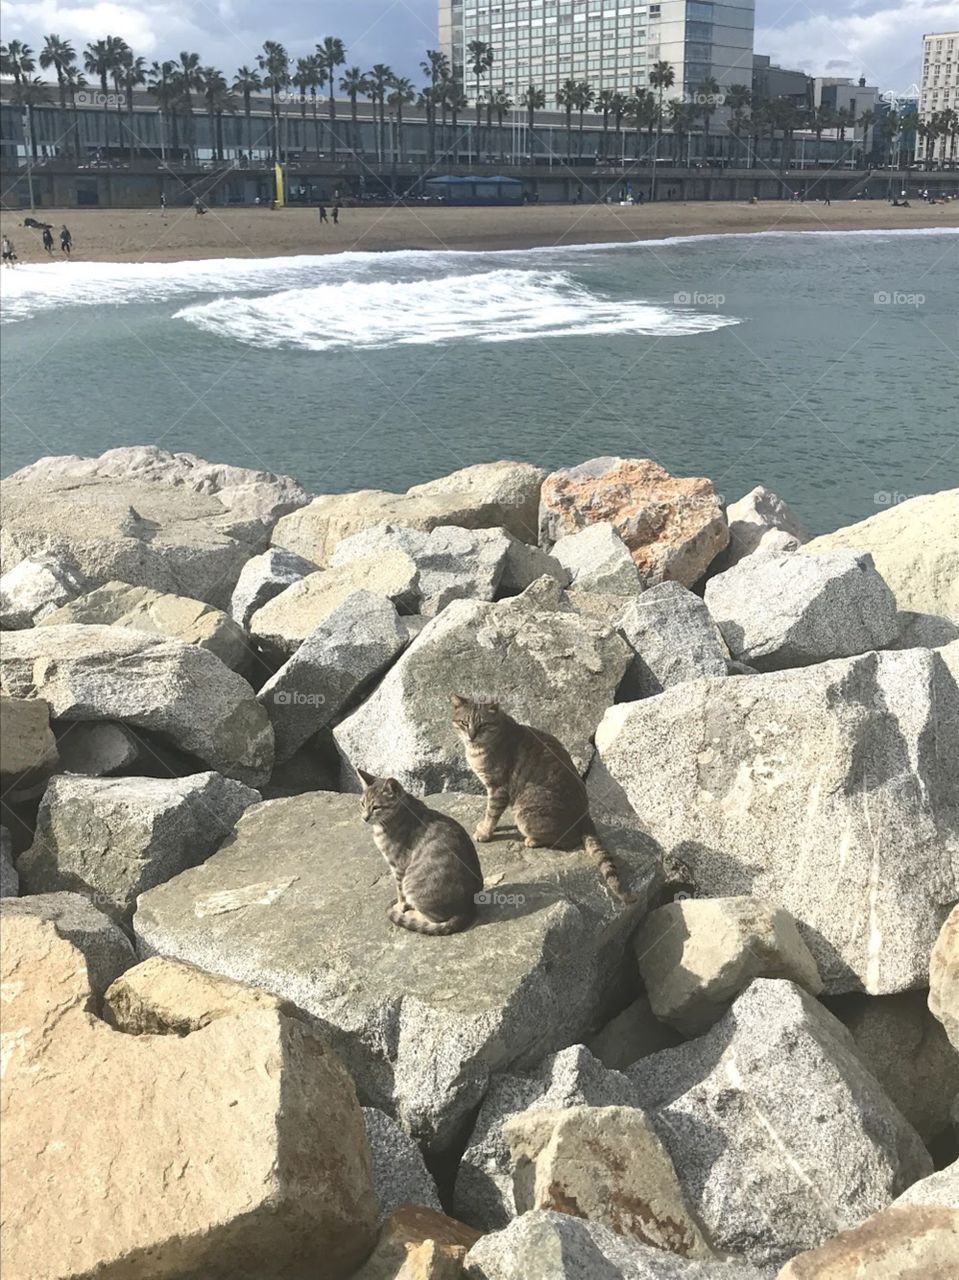 Cats sitting on rocks by water in Barcelona Spain 